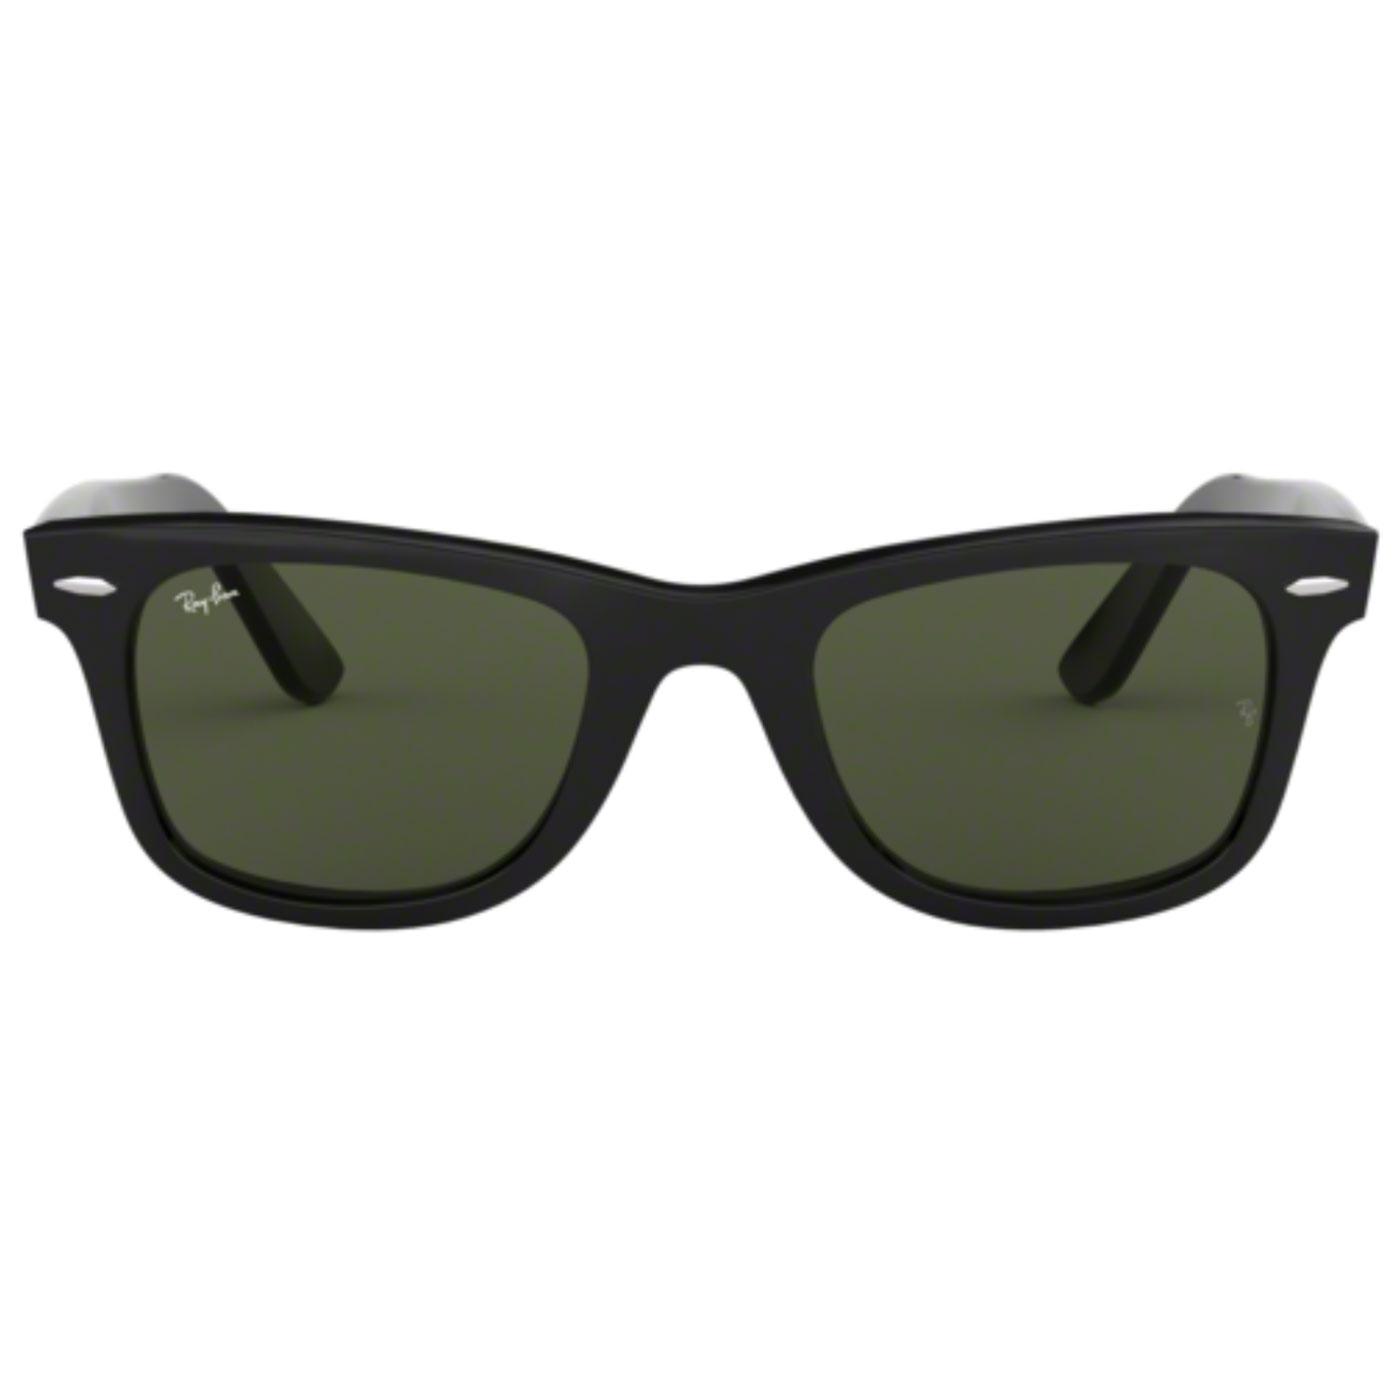 Ray-Ban Original Wayfarer Retro Sunglasses Black